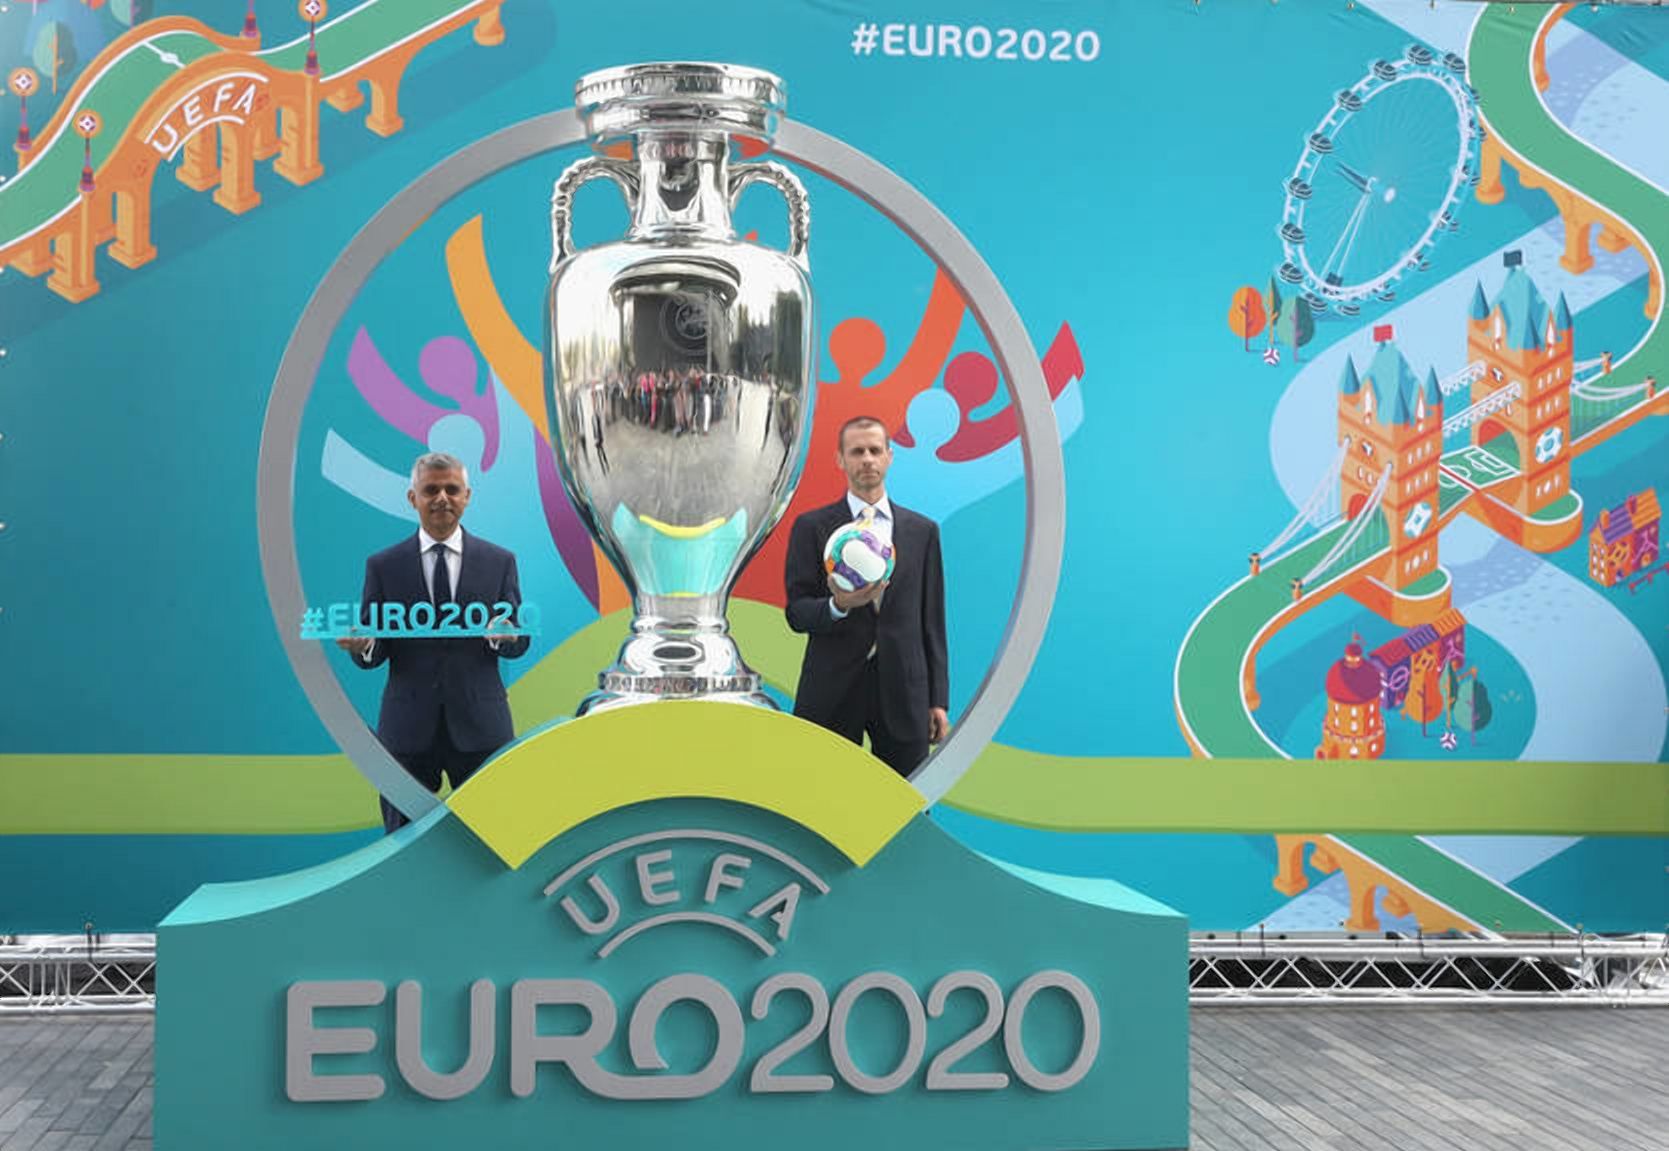 Евро-2020: УЕФА не исключает сокращения стран-хозяев до 4-х – кто фавориты